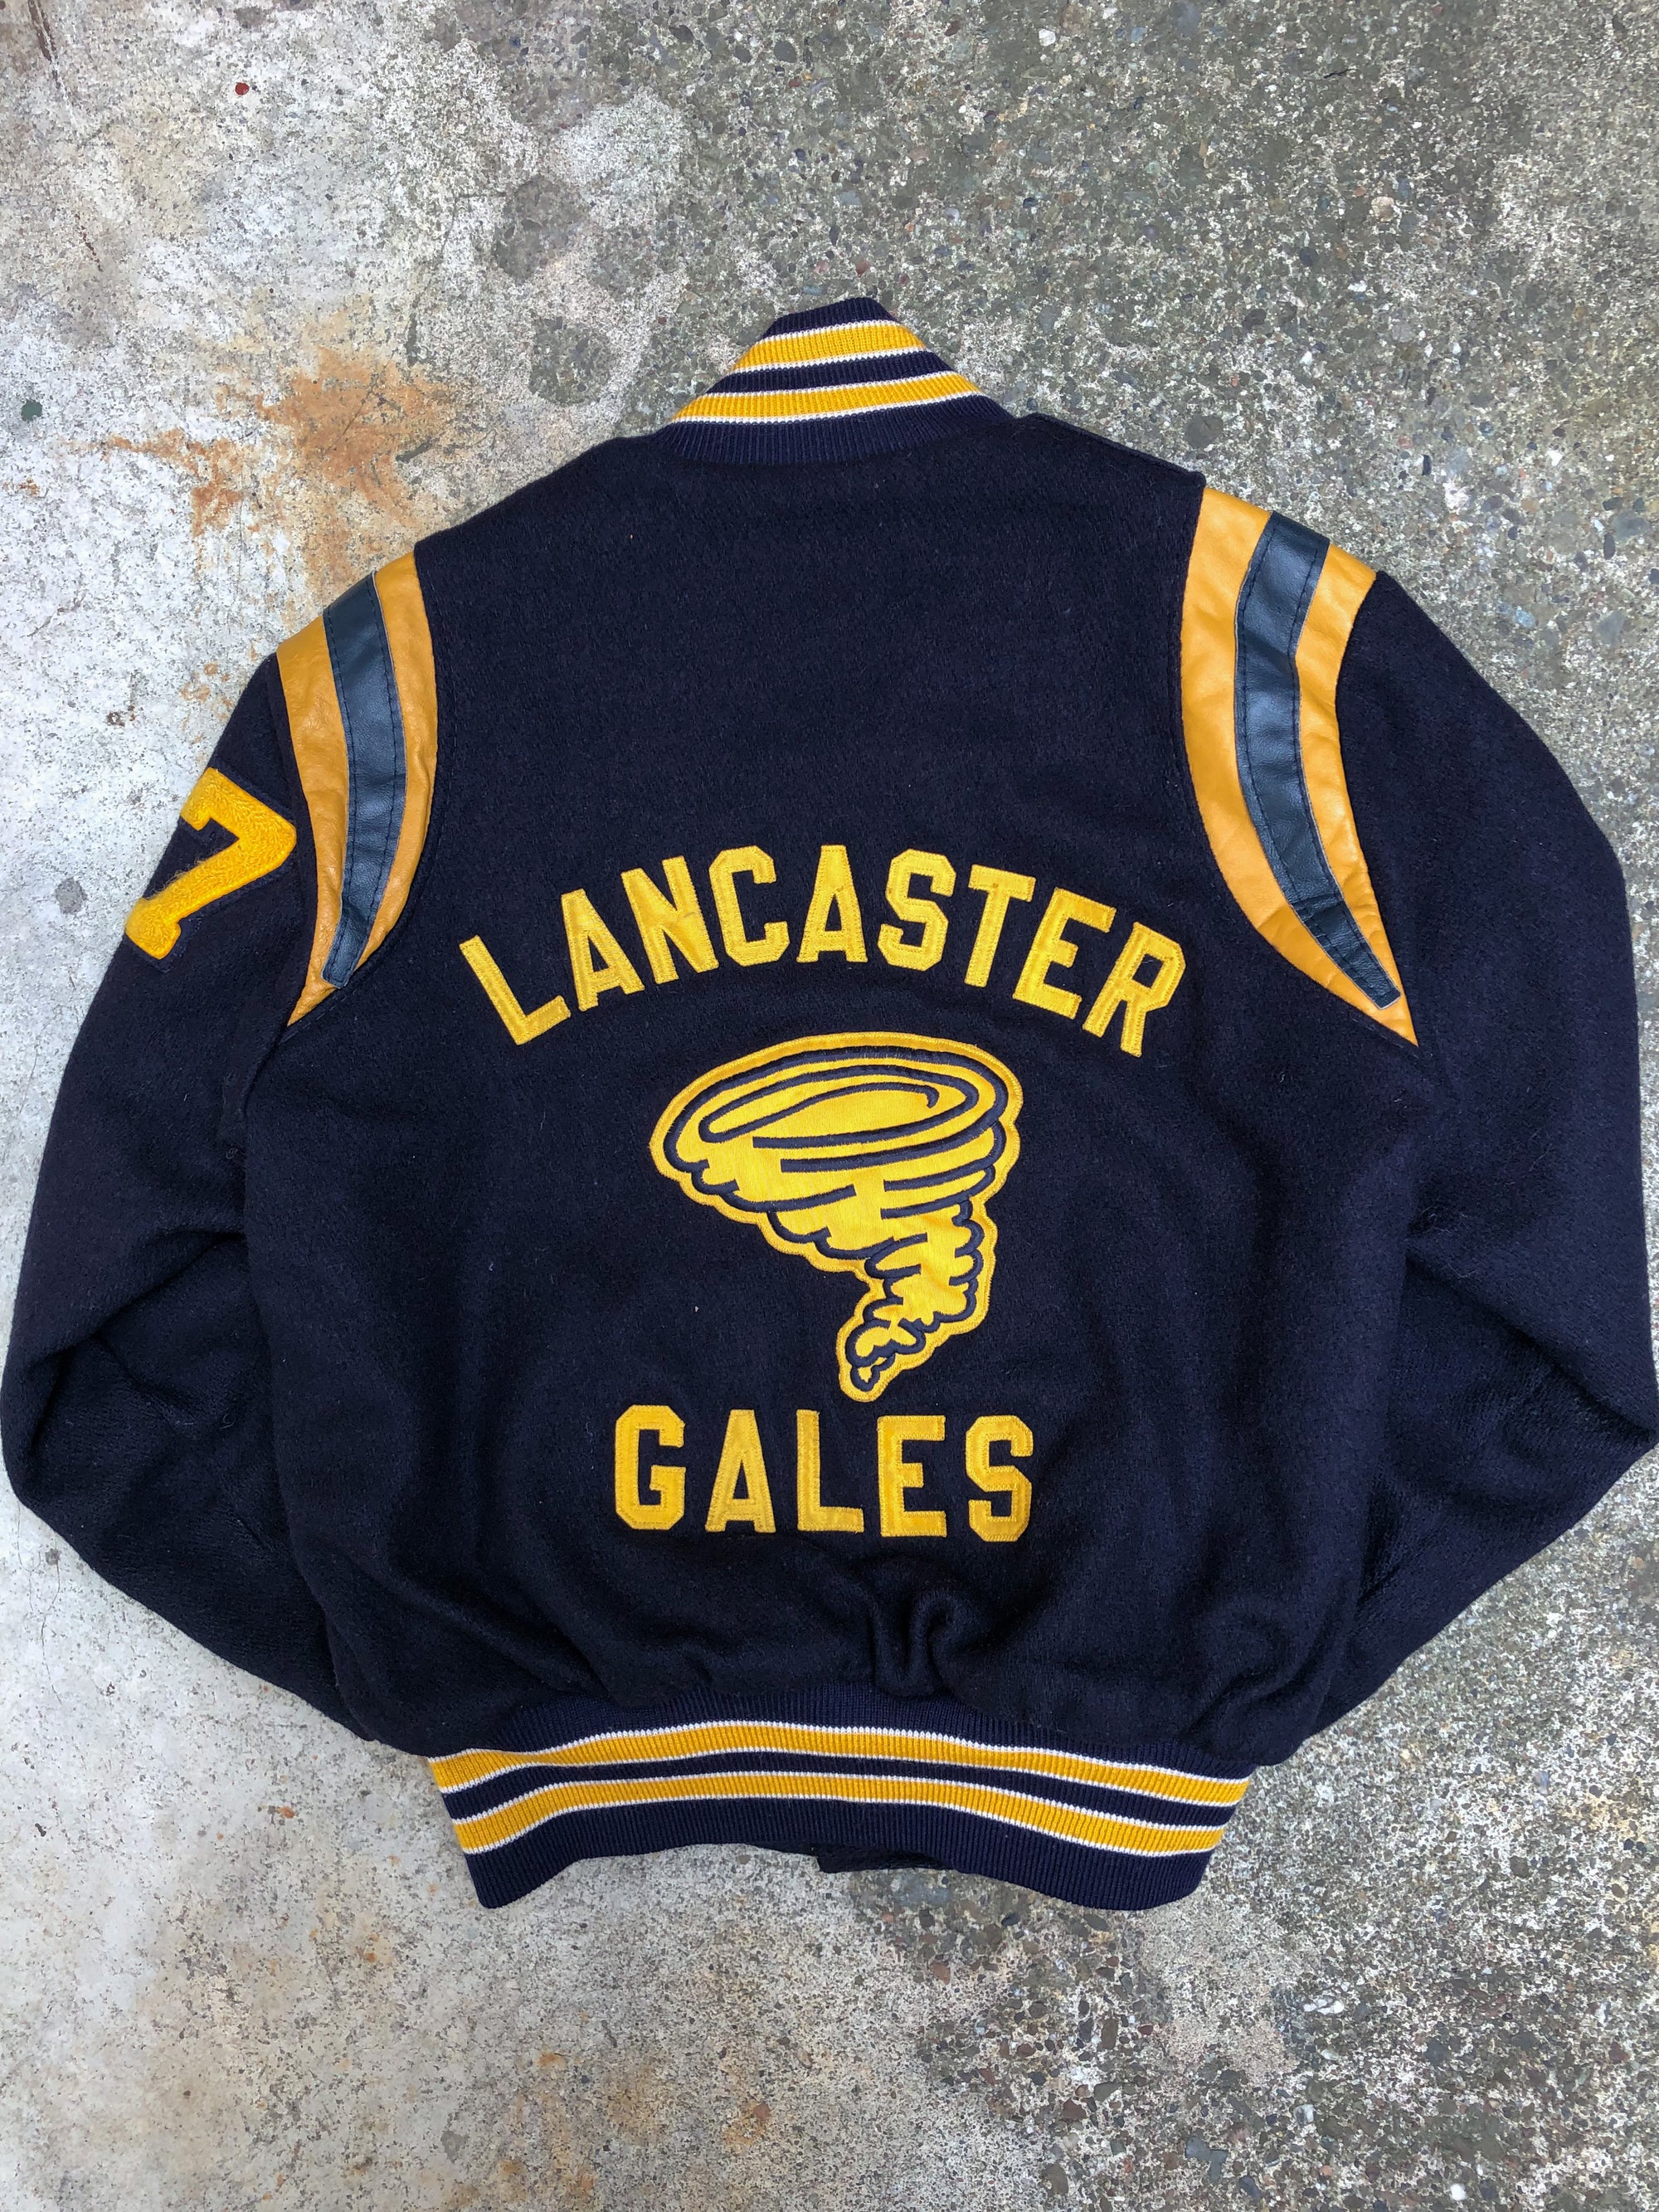 1990s Dark Navy “Lancaster Gales” Wool Varsity Jacket (S/M)